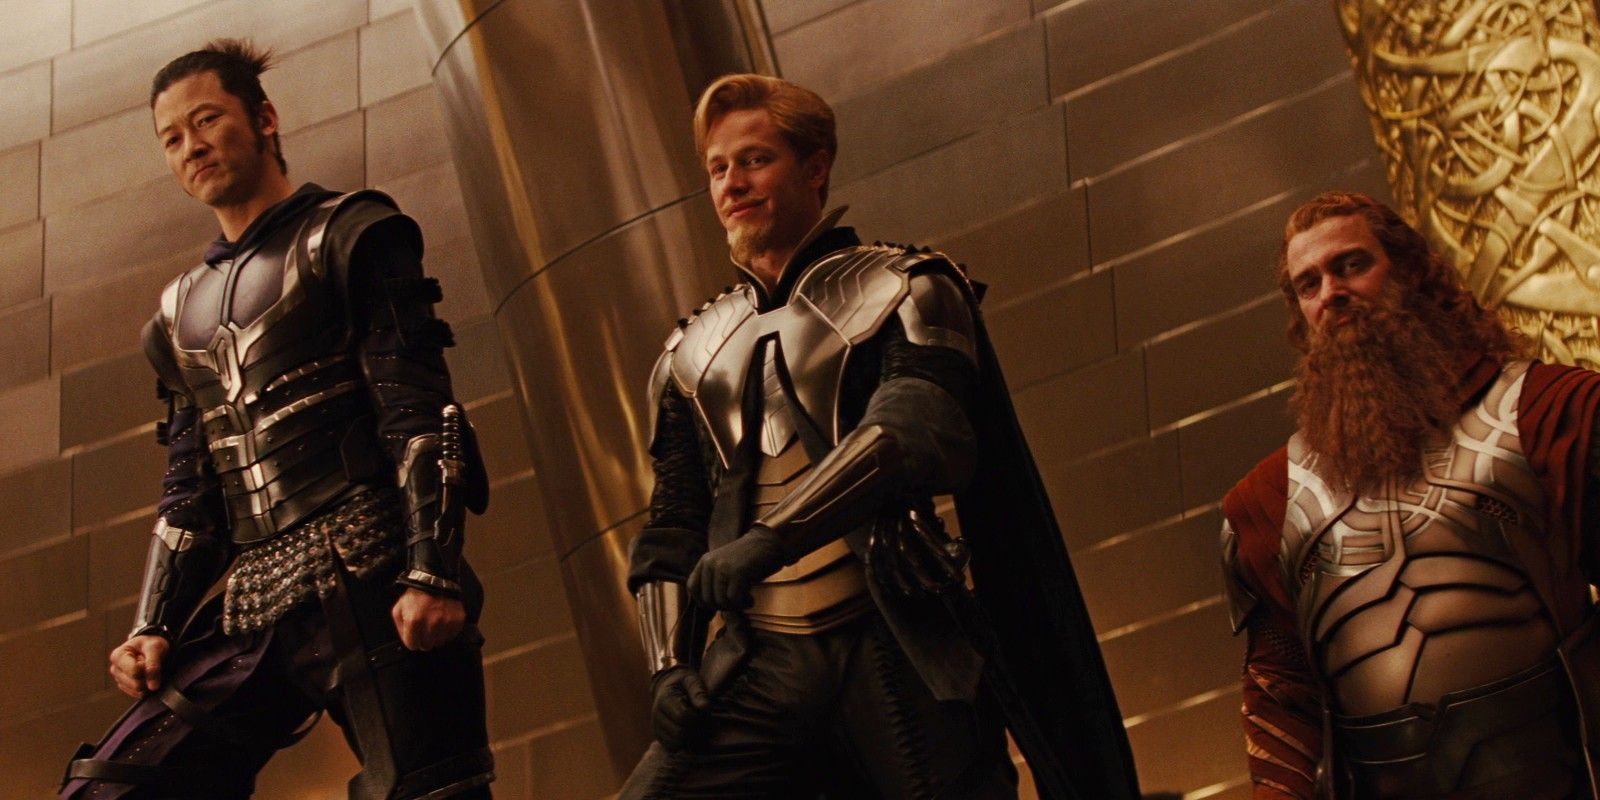 Joshua Dallas as Fendral, Tadanobu Asano as Hogun and Ray Stevenson as Volstagg in Thor